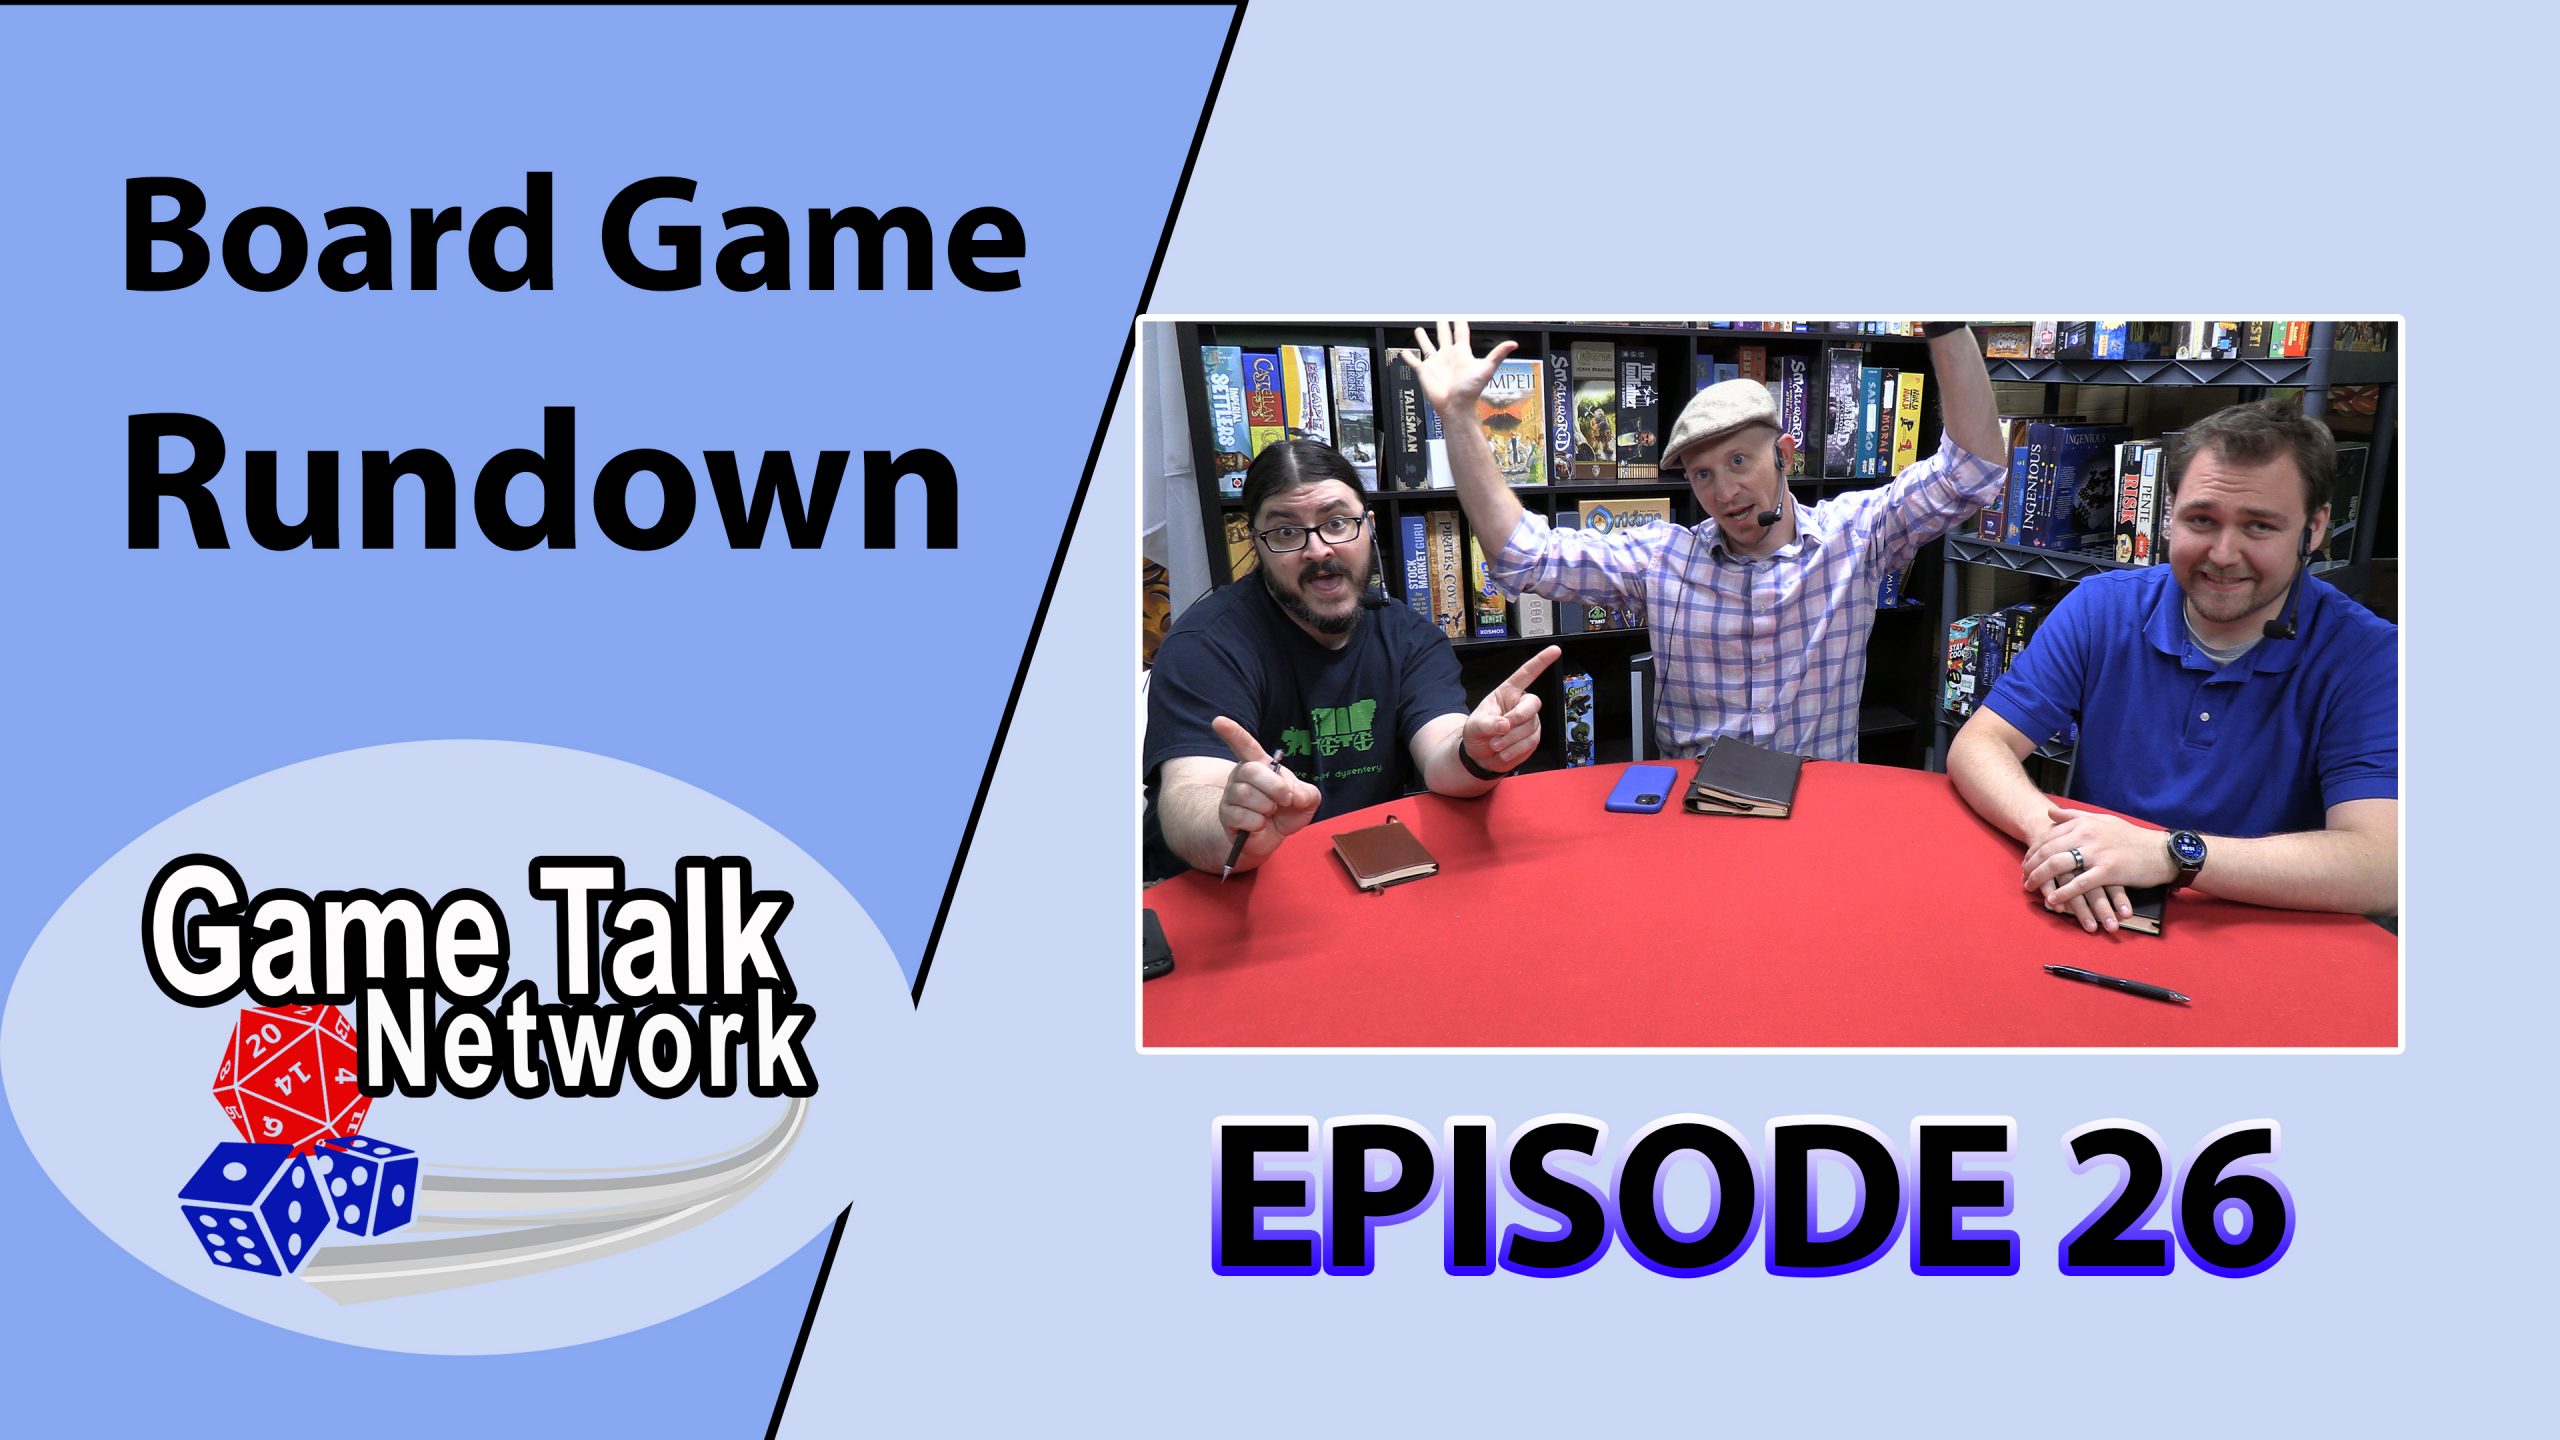 Board Game Rundown Episode 26: The Accidental Short One